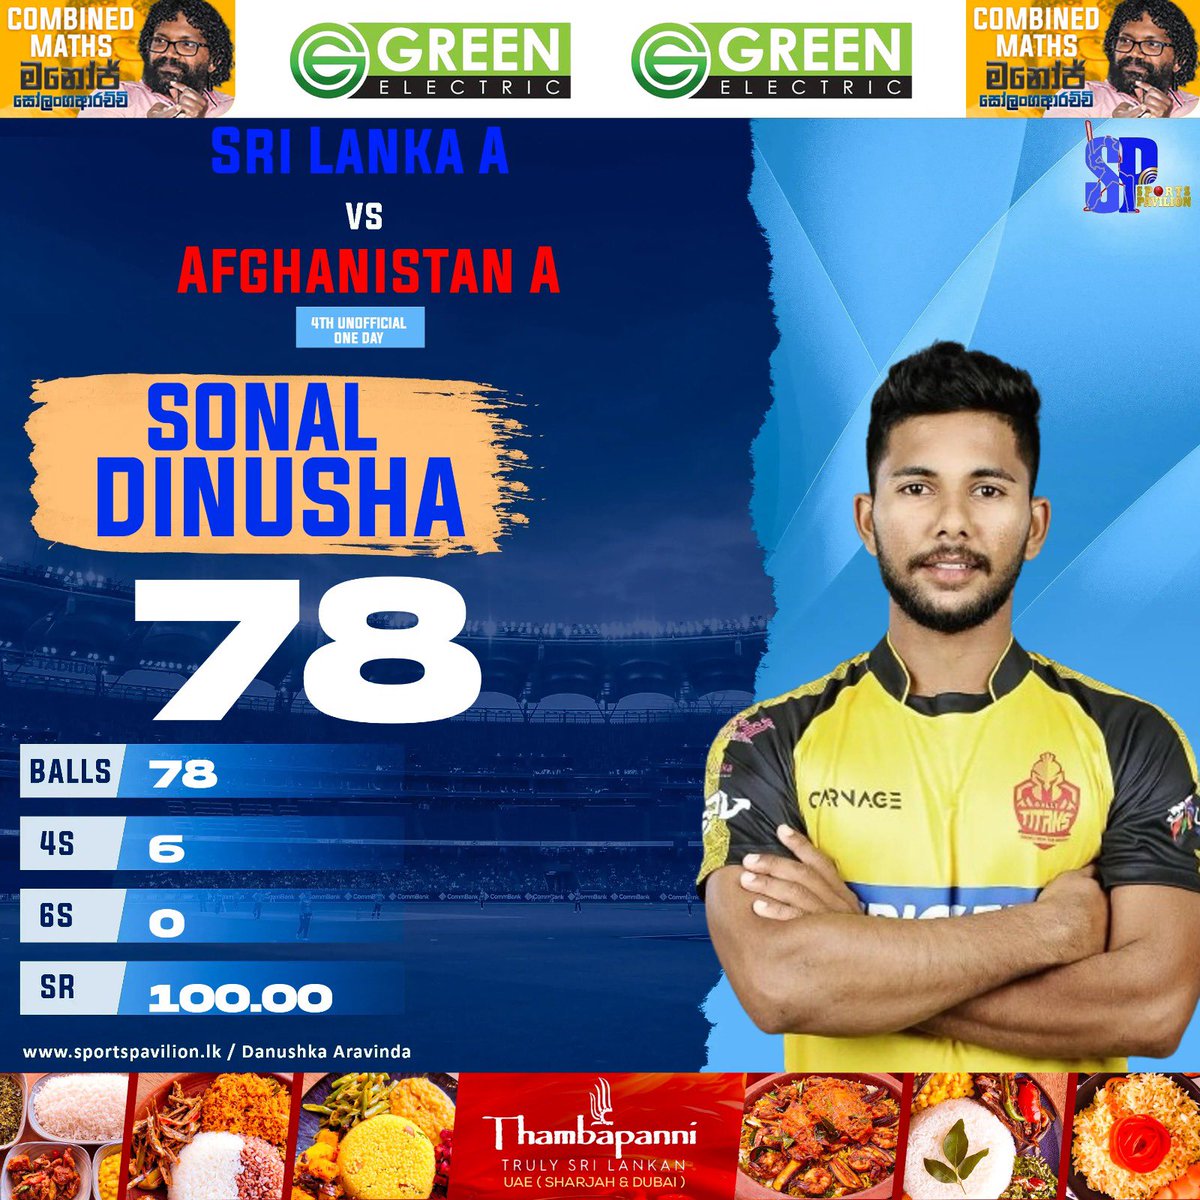 Top Performancers - Sri Lanka 'A' - 4th Unofficial One Day against Afganistan 'A' 

Nishan Madushka - 115 (127) 
Sonal Dinusha 78 (78) 

#sportspavilionlk #SriLankaA #AfghanistanA #danushkaaravinda